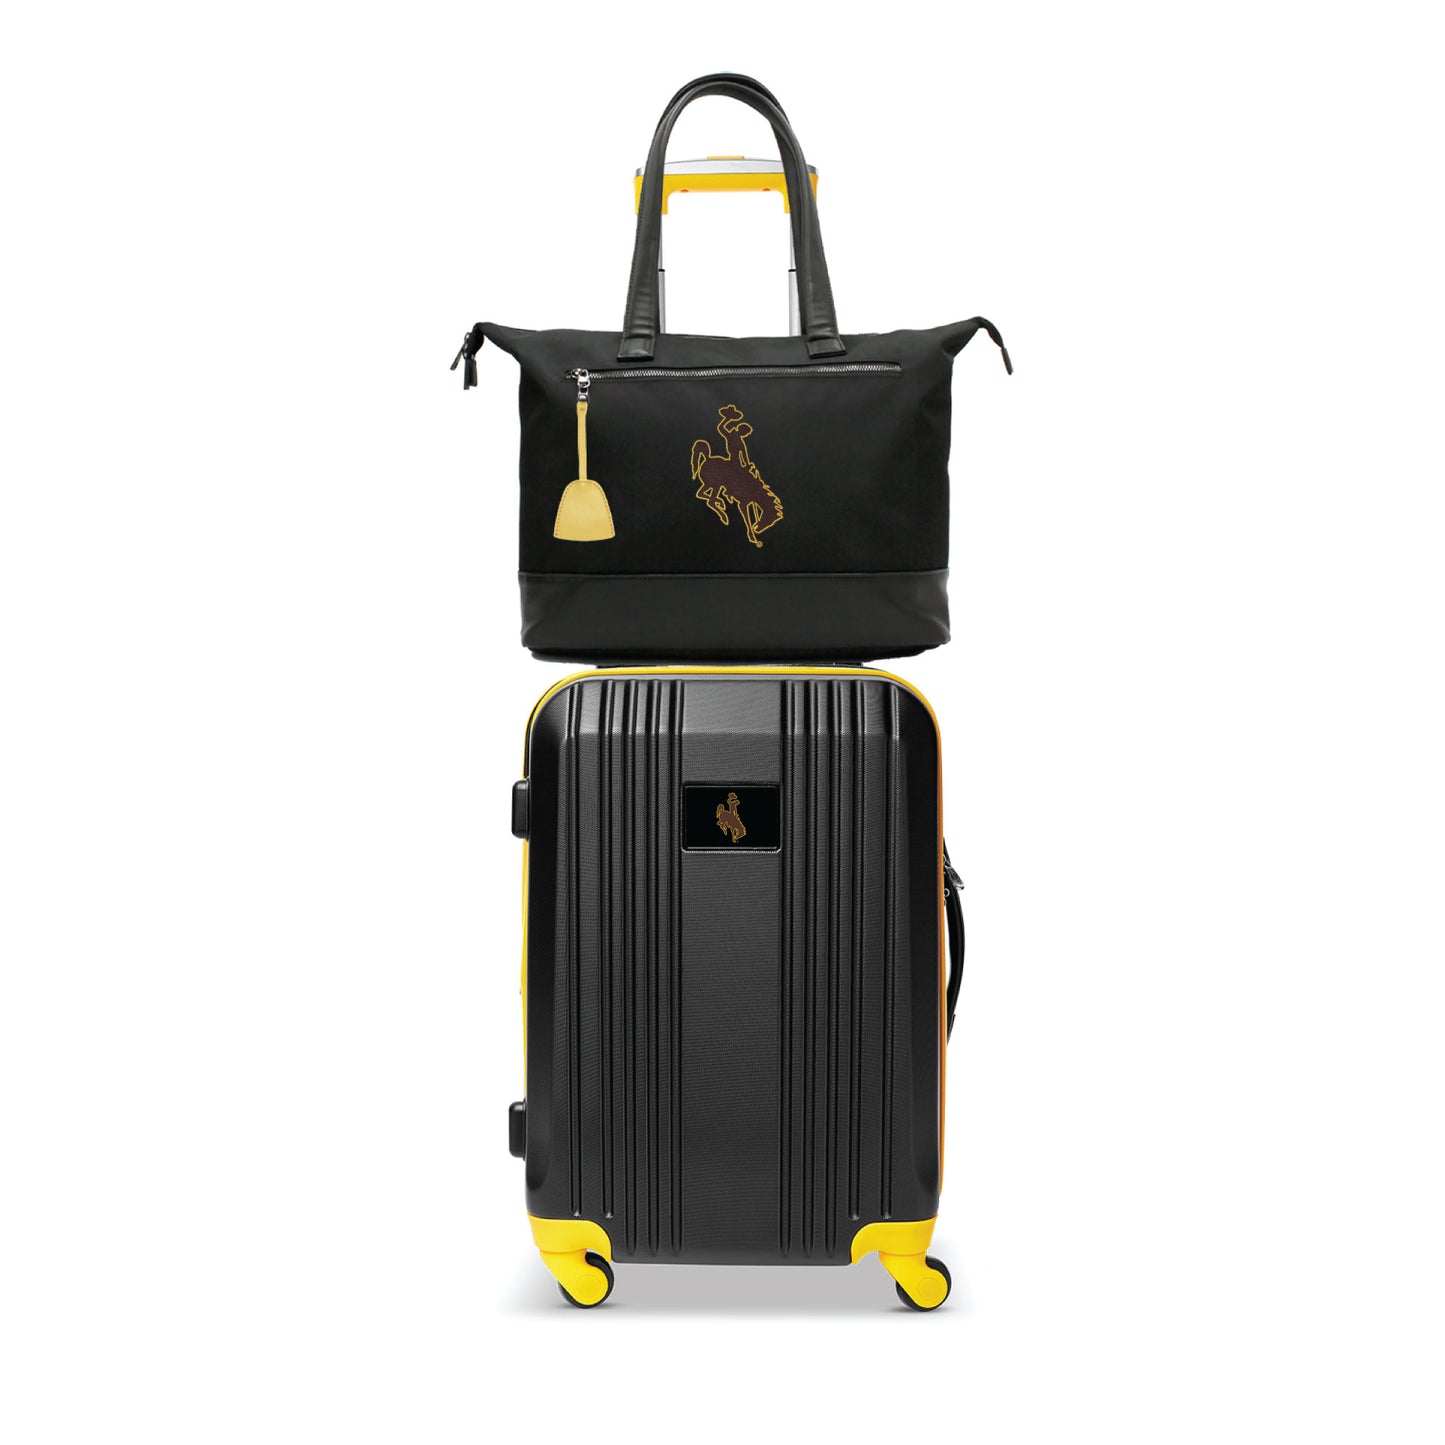 Wyoming Cowboys Premium Laptop Tote Bag and Luggage Set